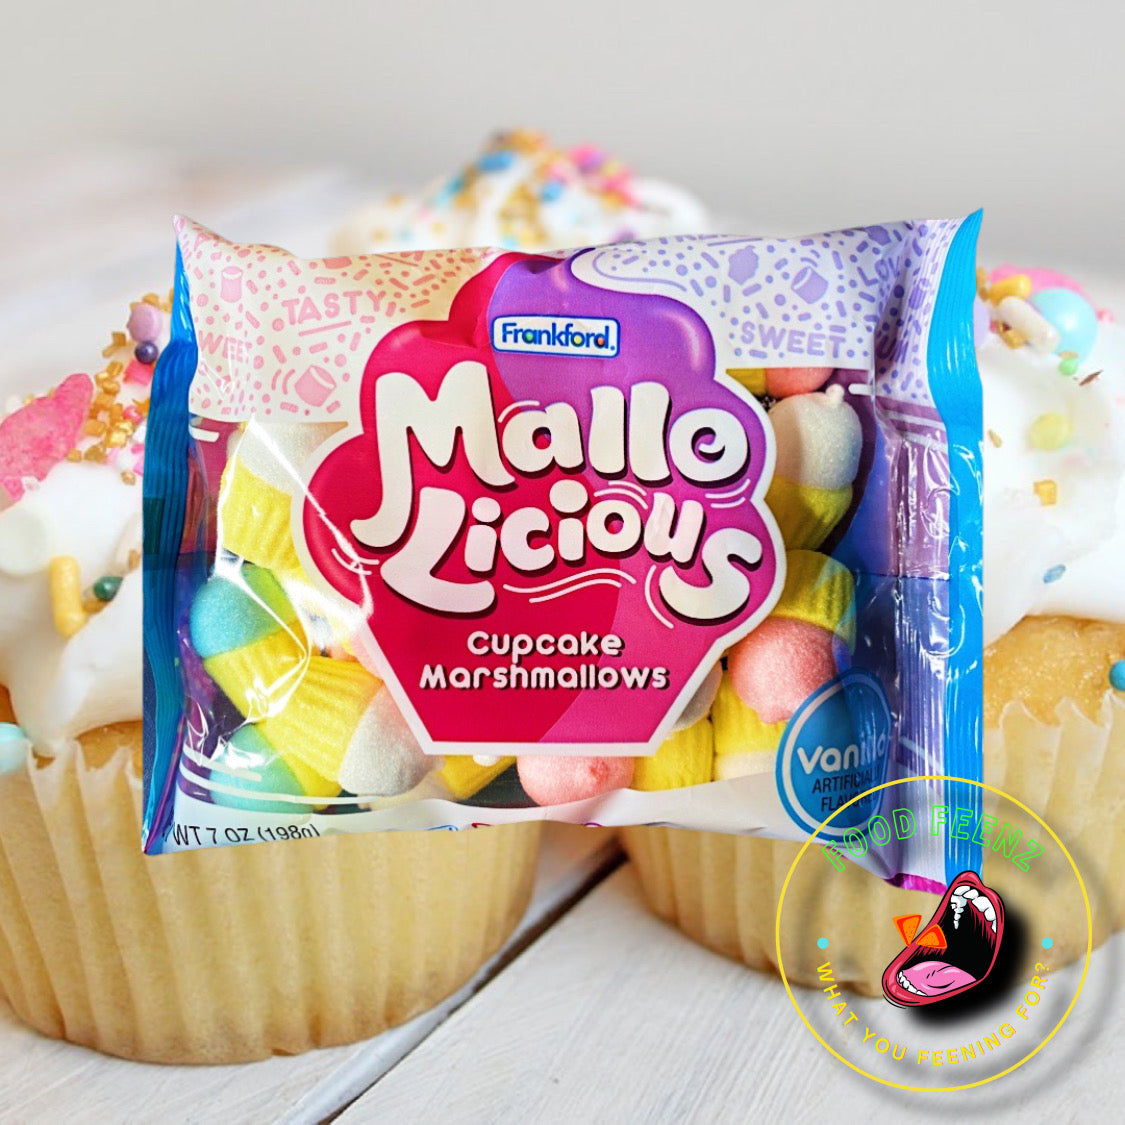 Mallolicious Cupcake Marshmallows (Italy)